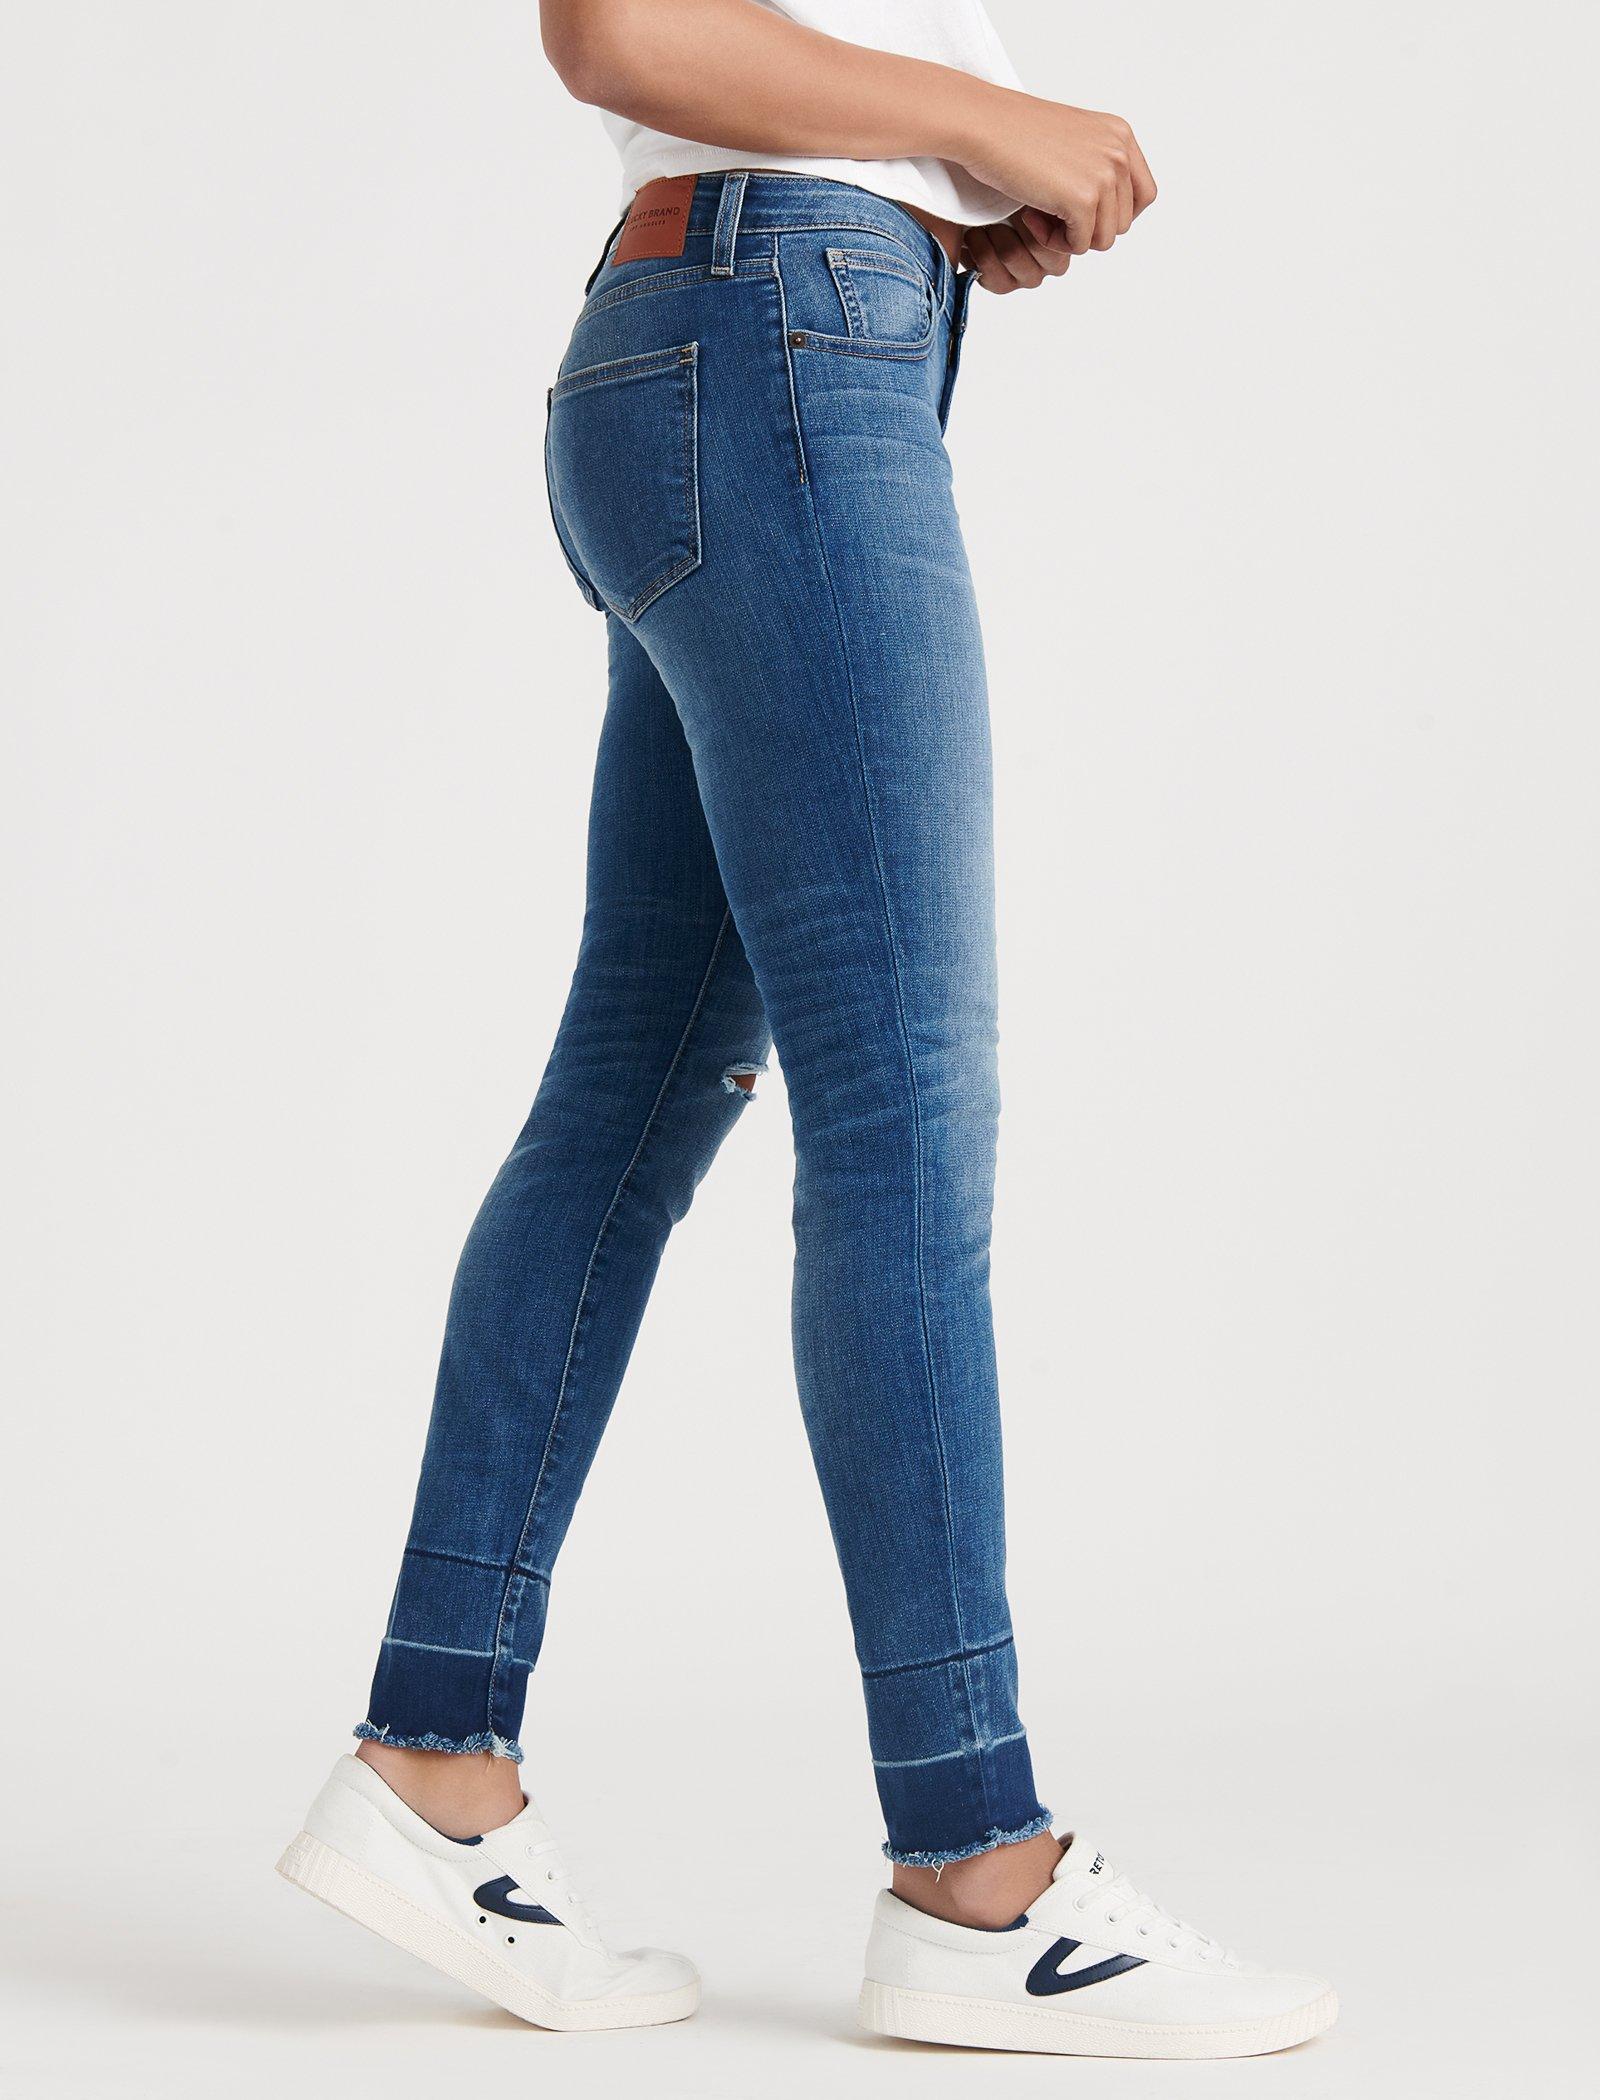 skinny jeans womens cheap